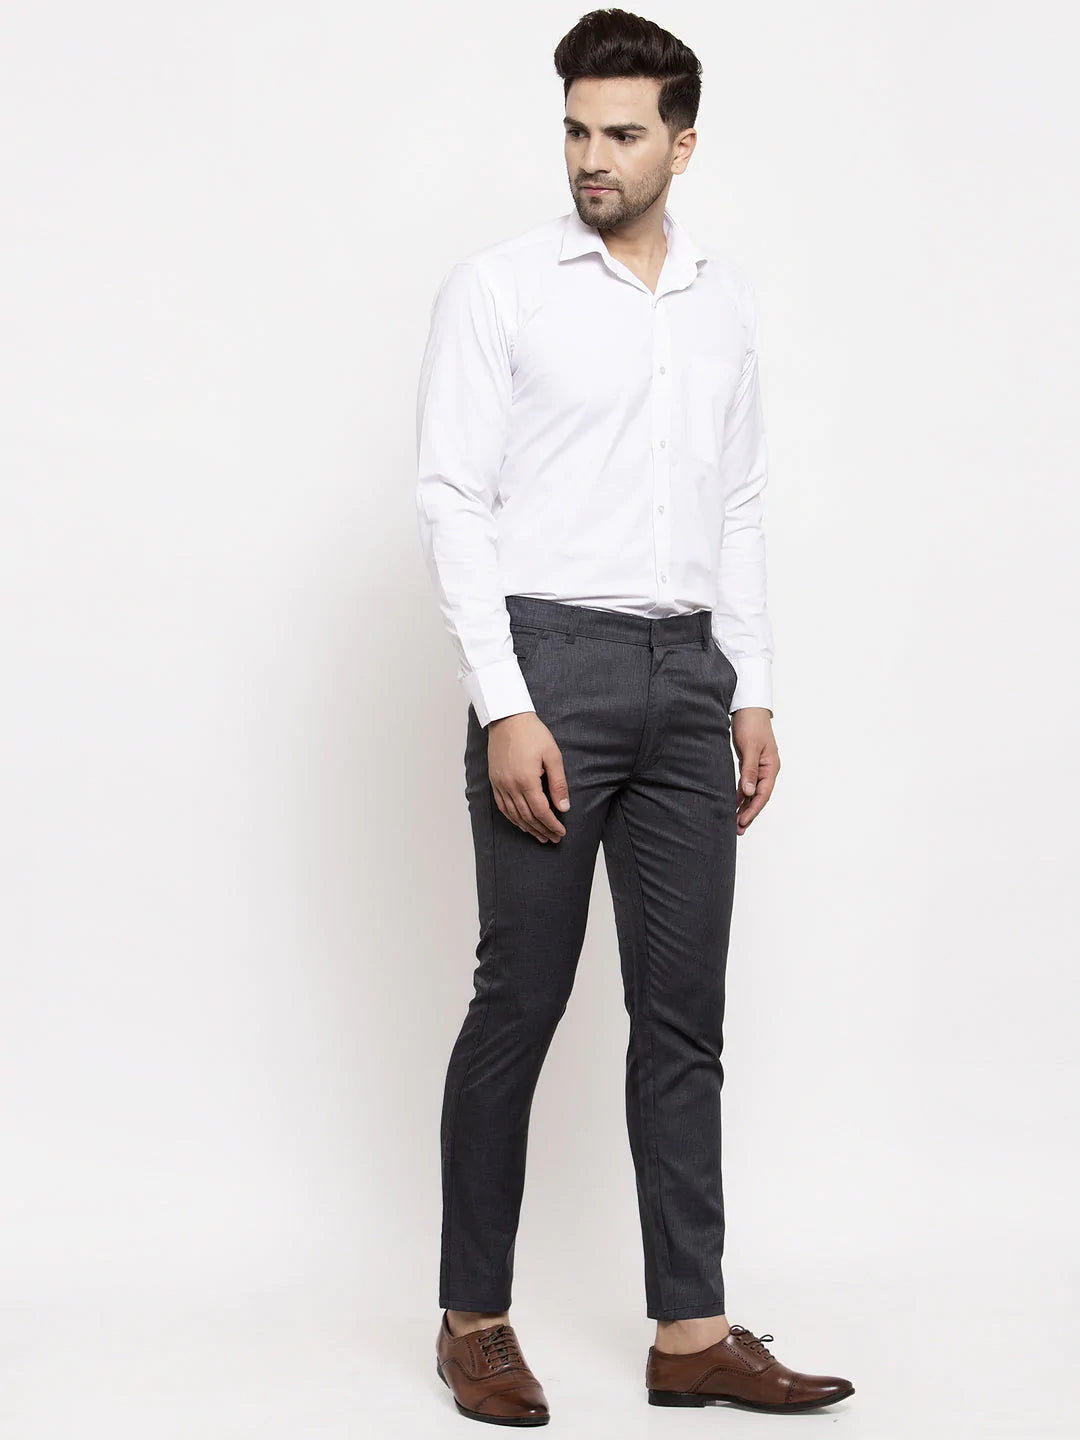 Jainish Men's Black Cotton Solid Formal Trousers ( FGP 258Charcoal )